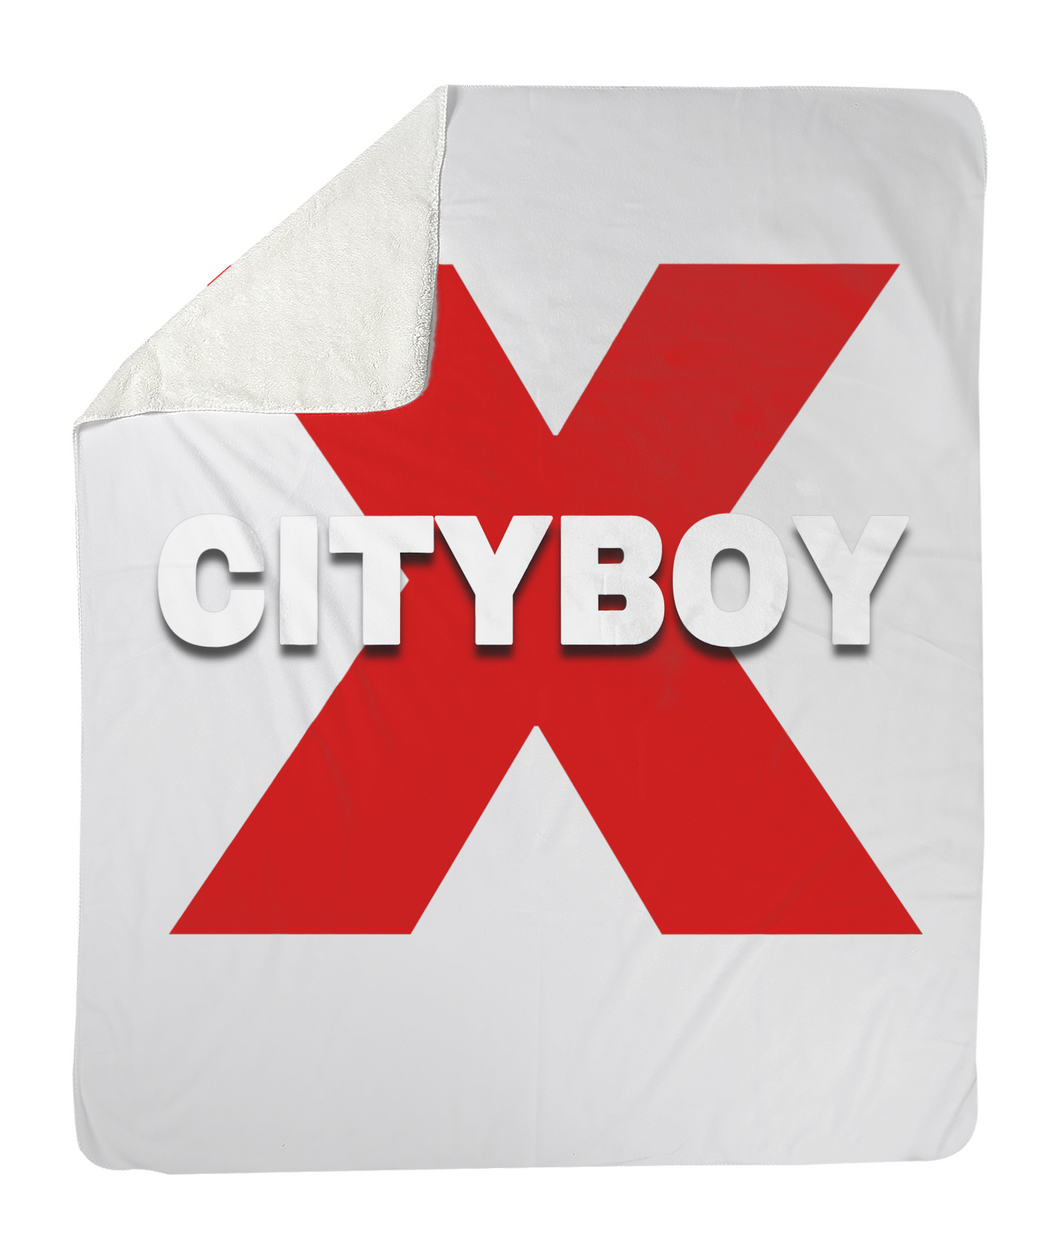 CITYBOY print Fleece Blankets - Sherpa (50